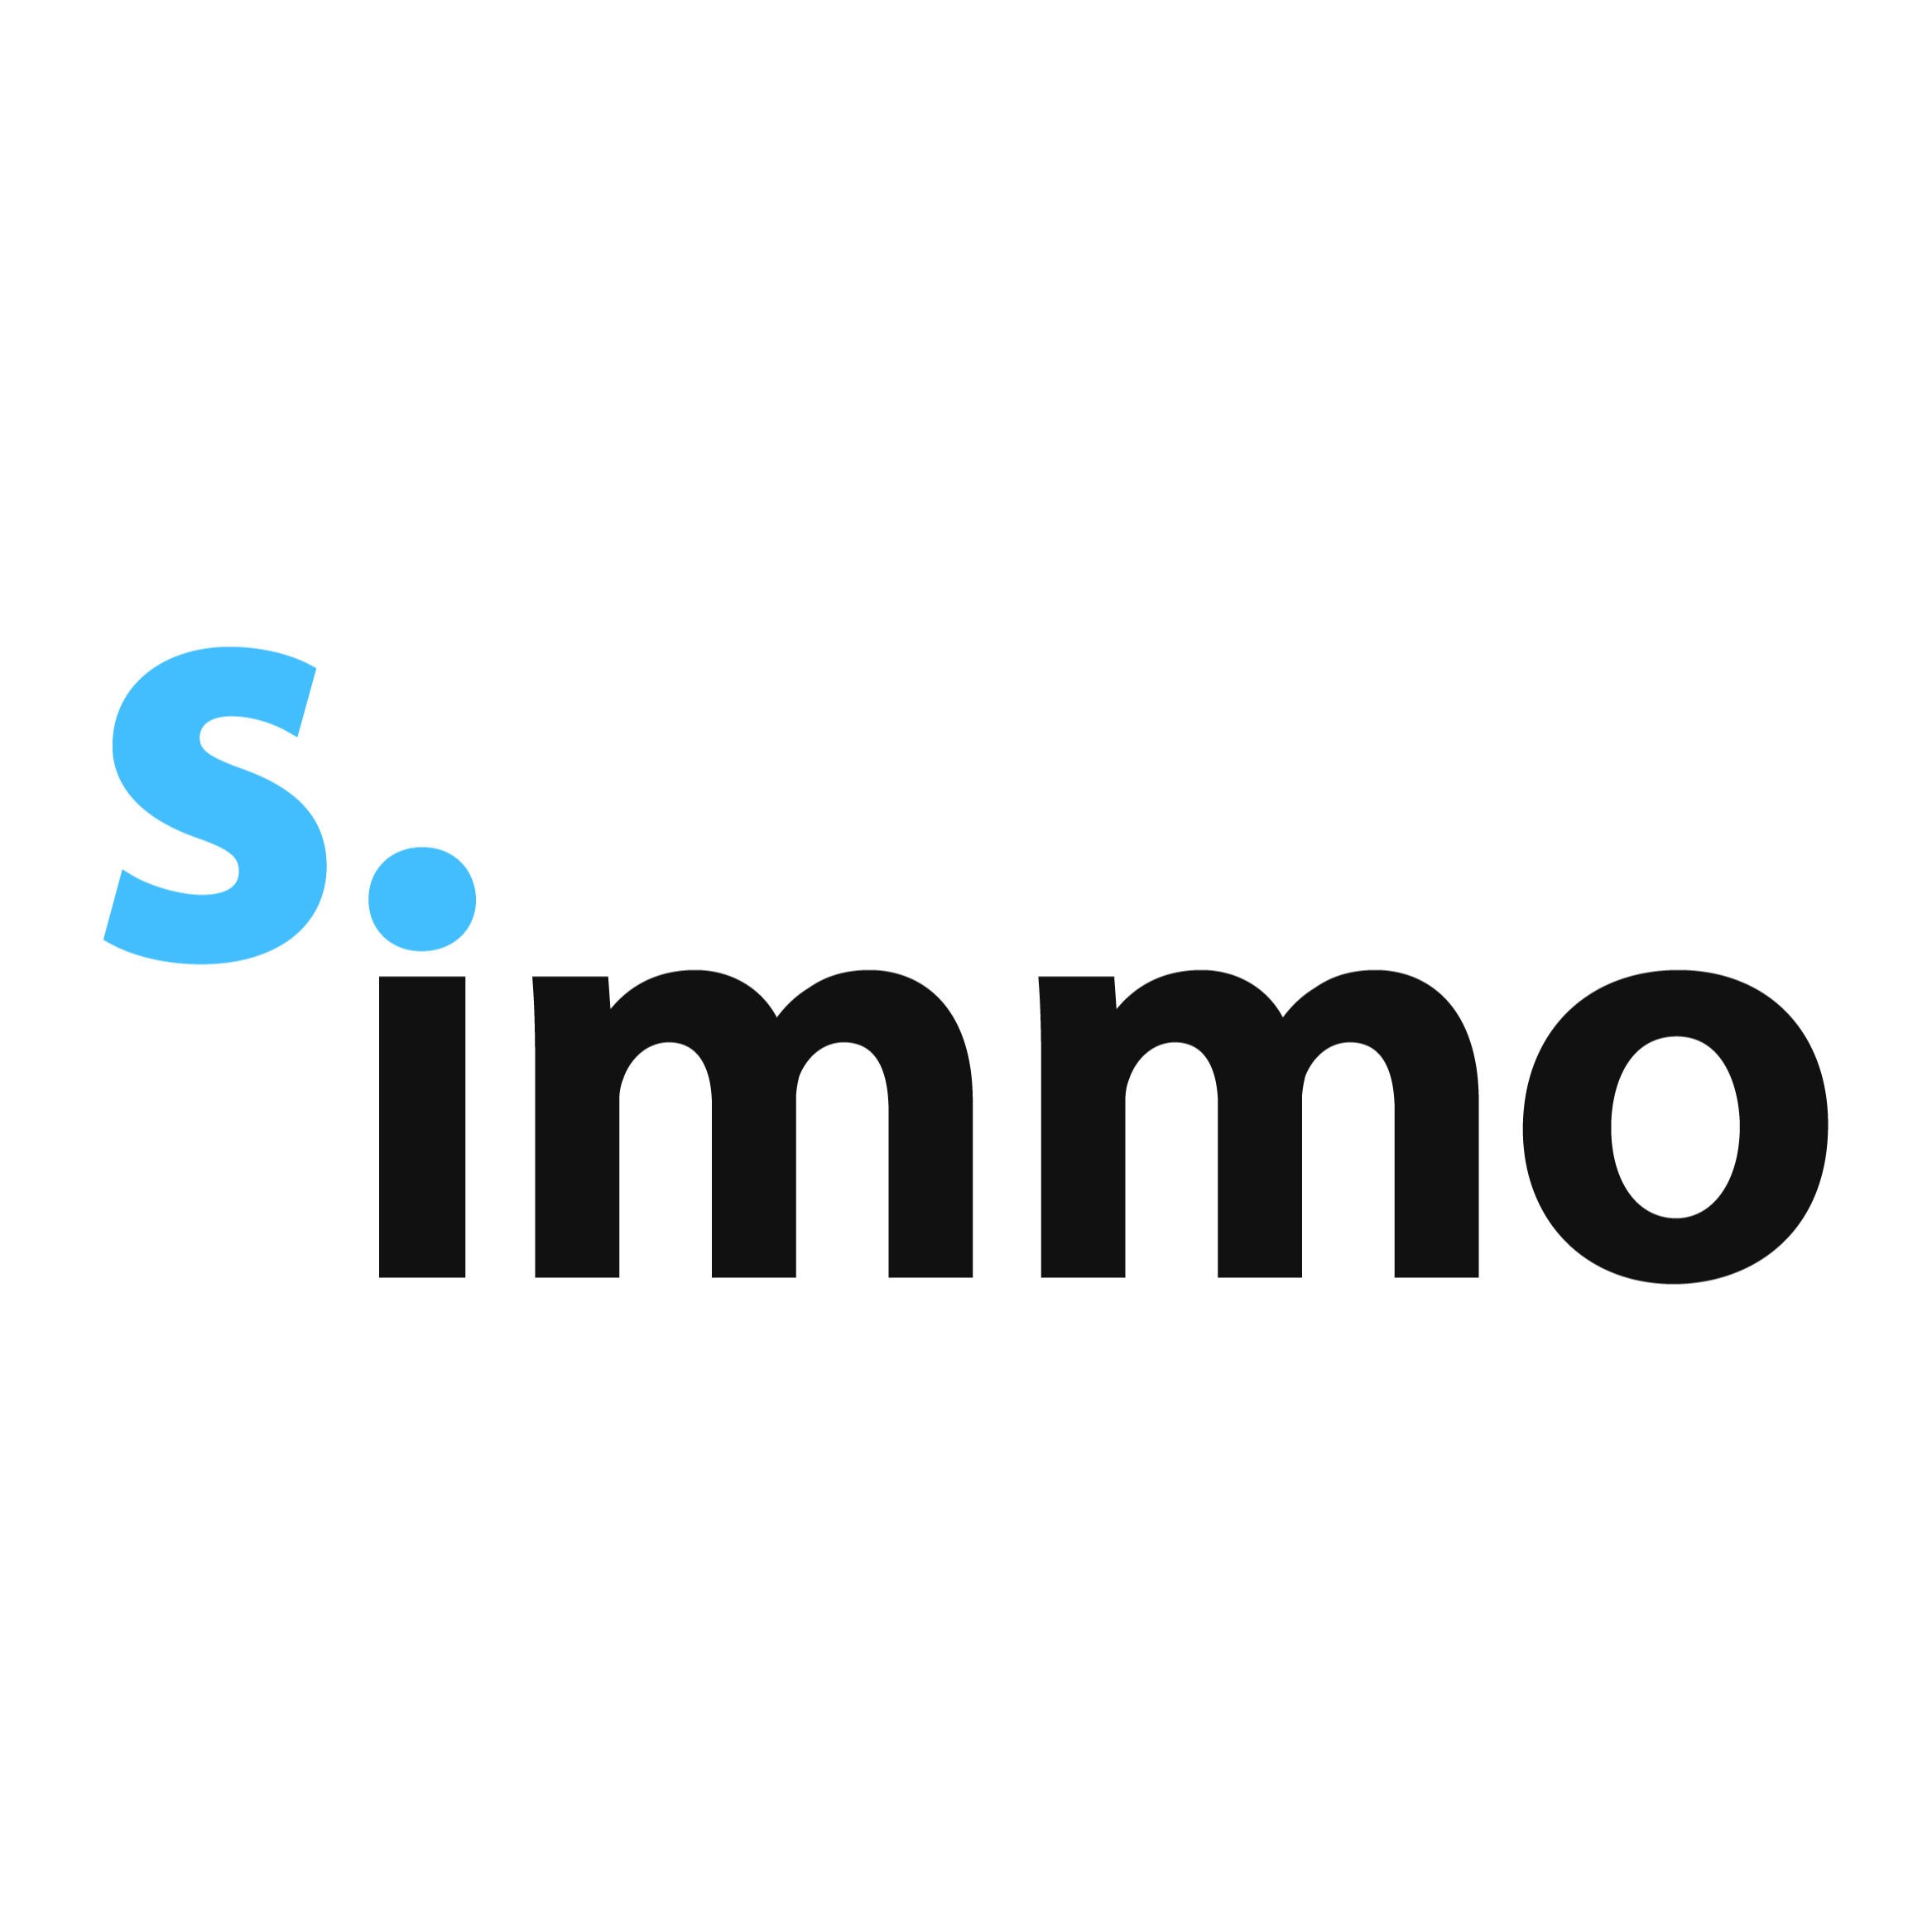 Logo s.immo - Immobilienbüro Schwanke